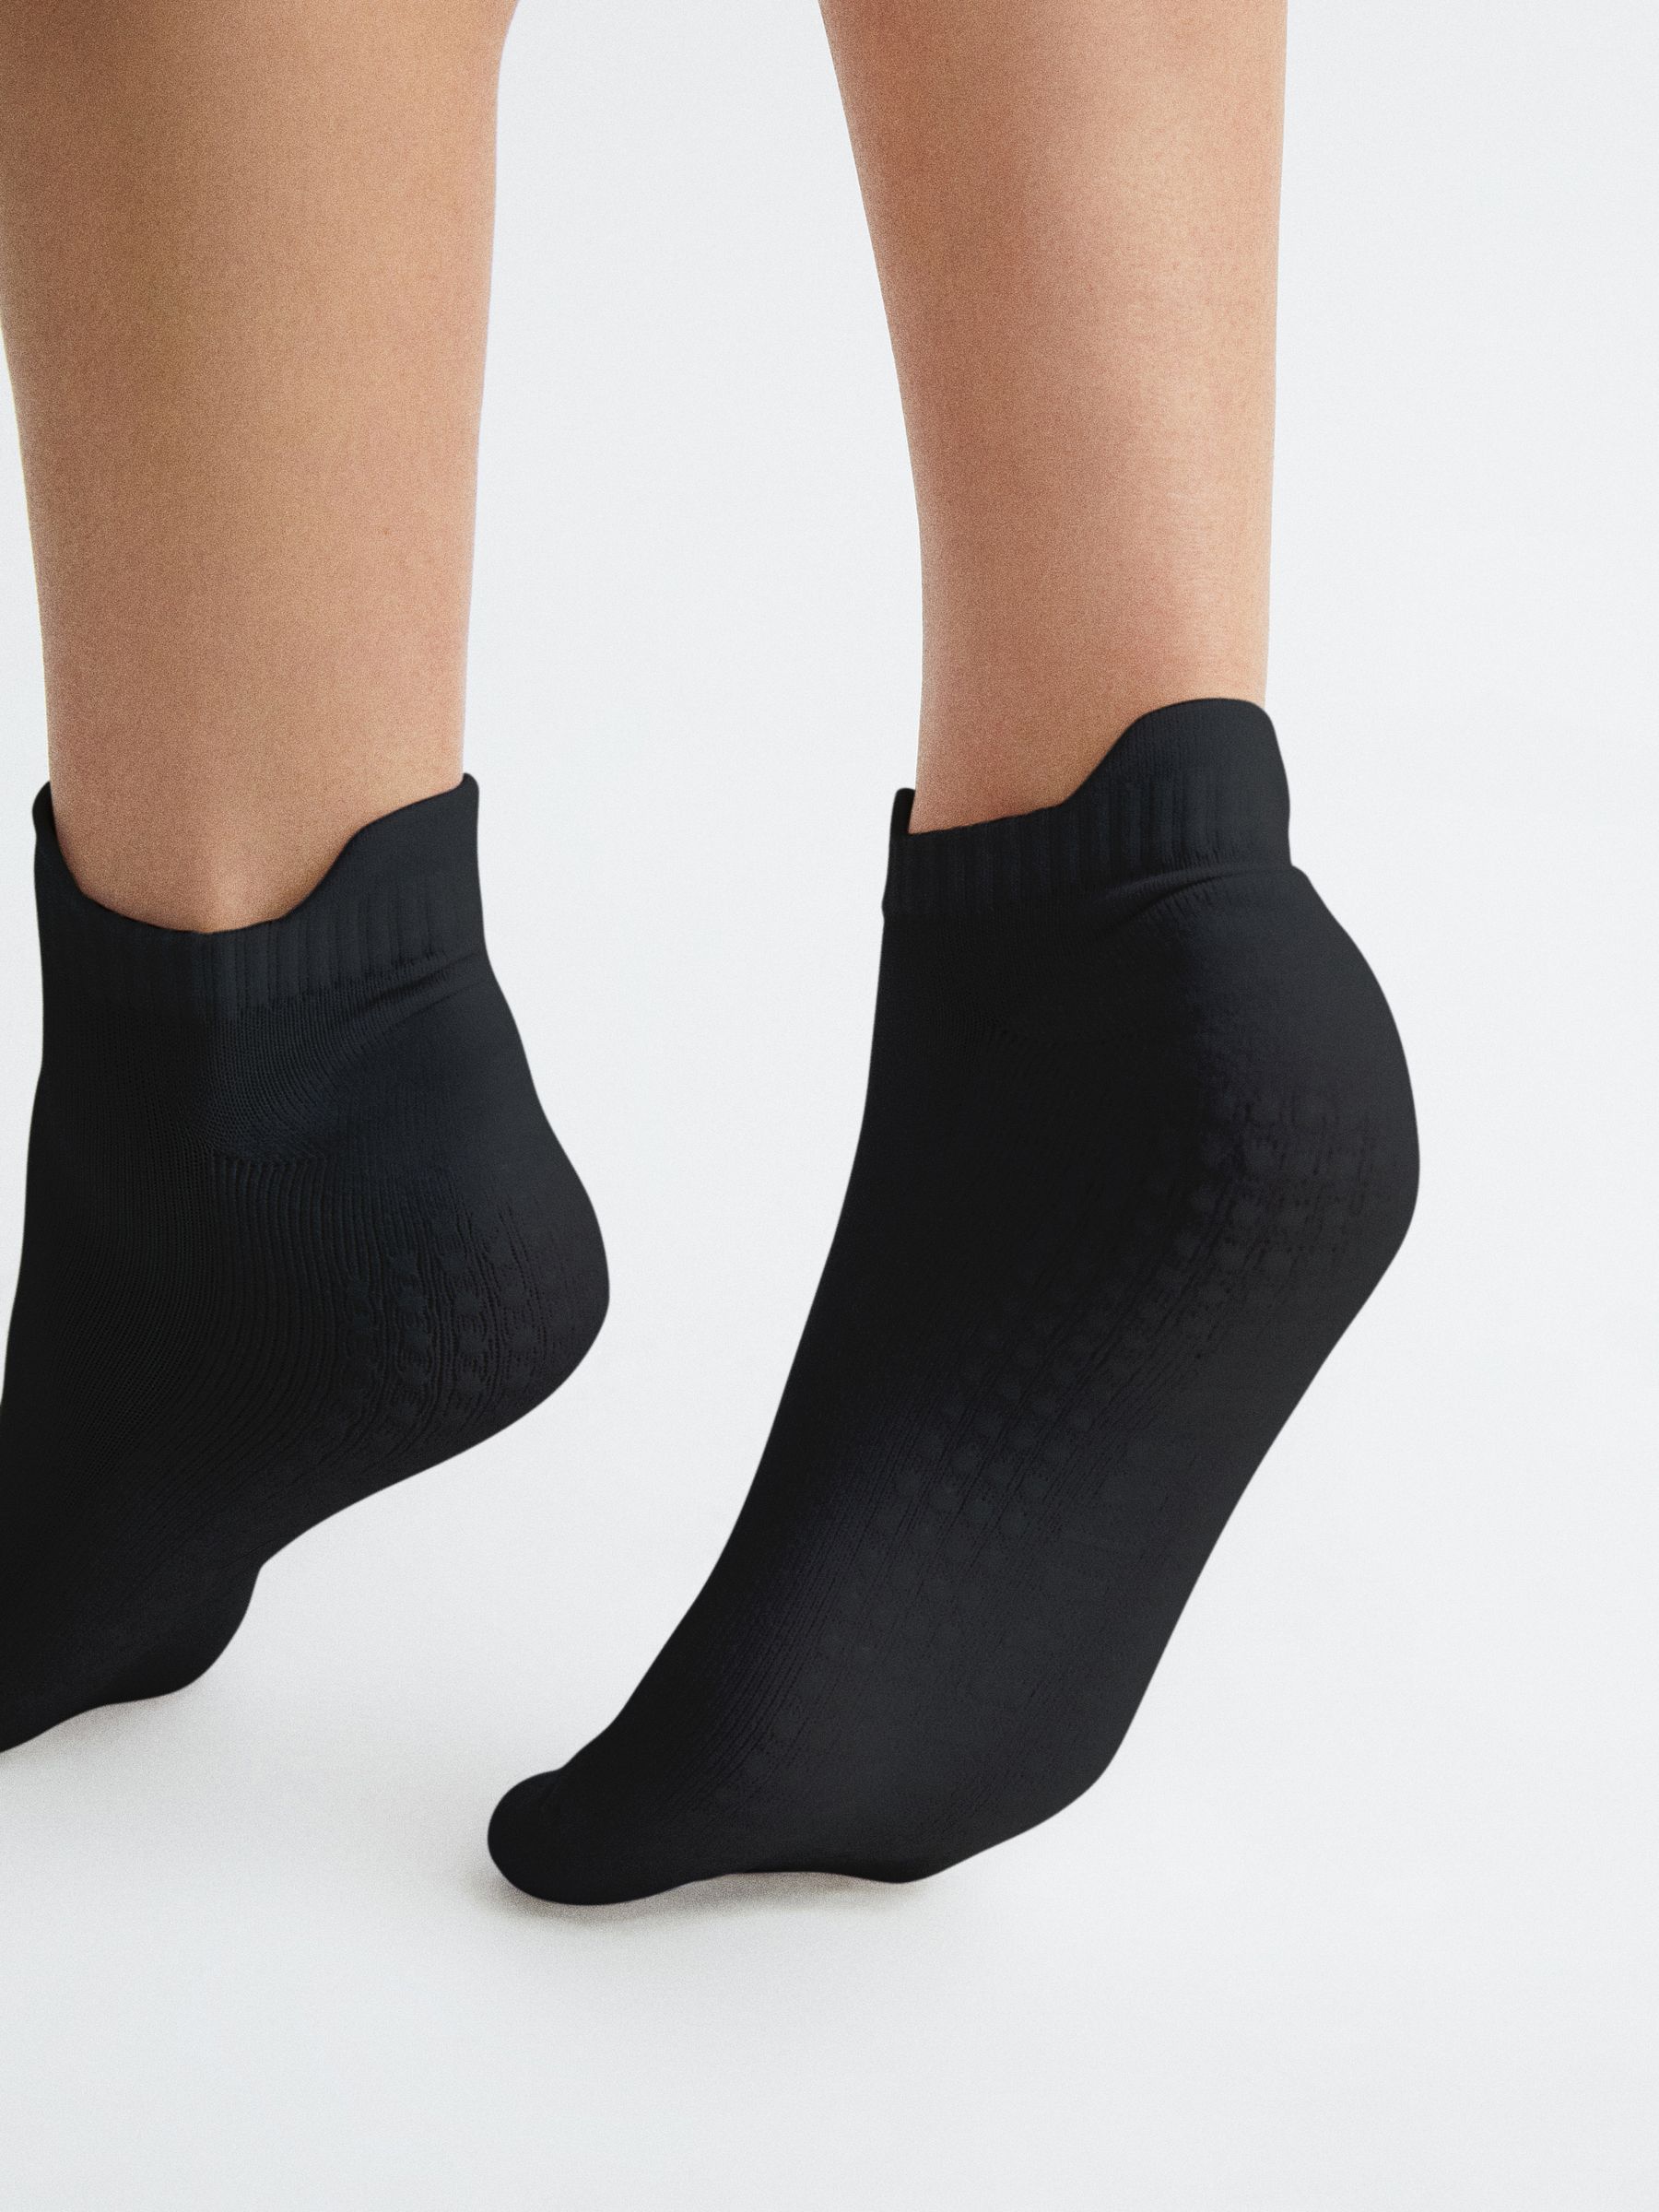 Reiss Castore - Robyn Castore Yoga Ankle Socks - REISS